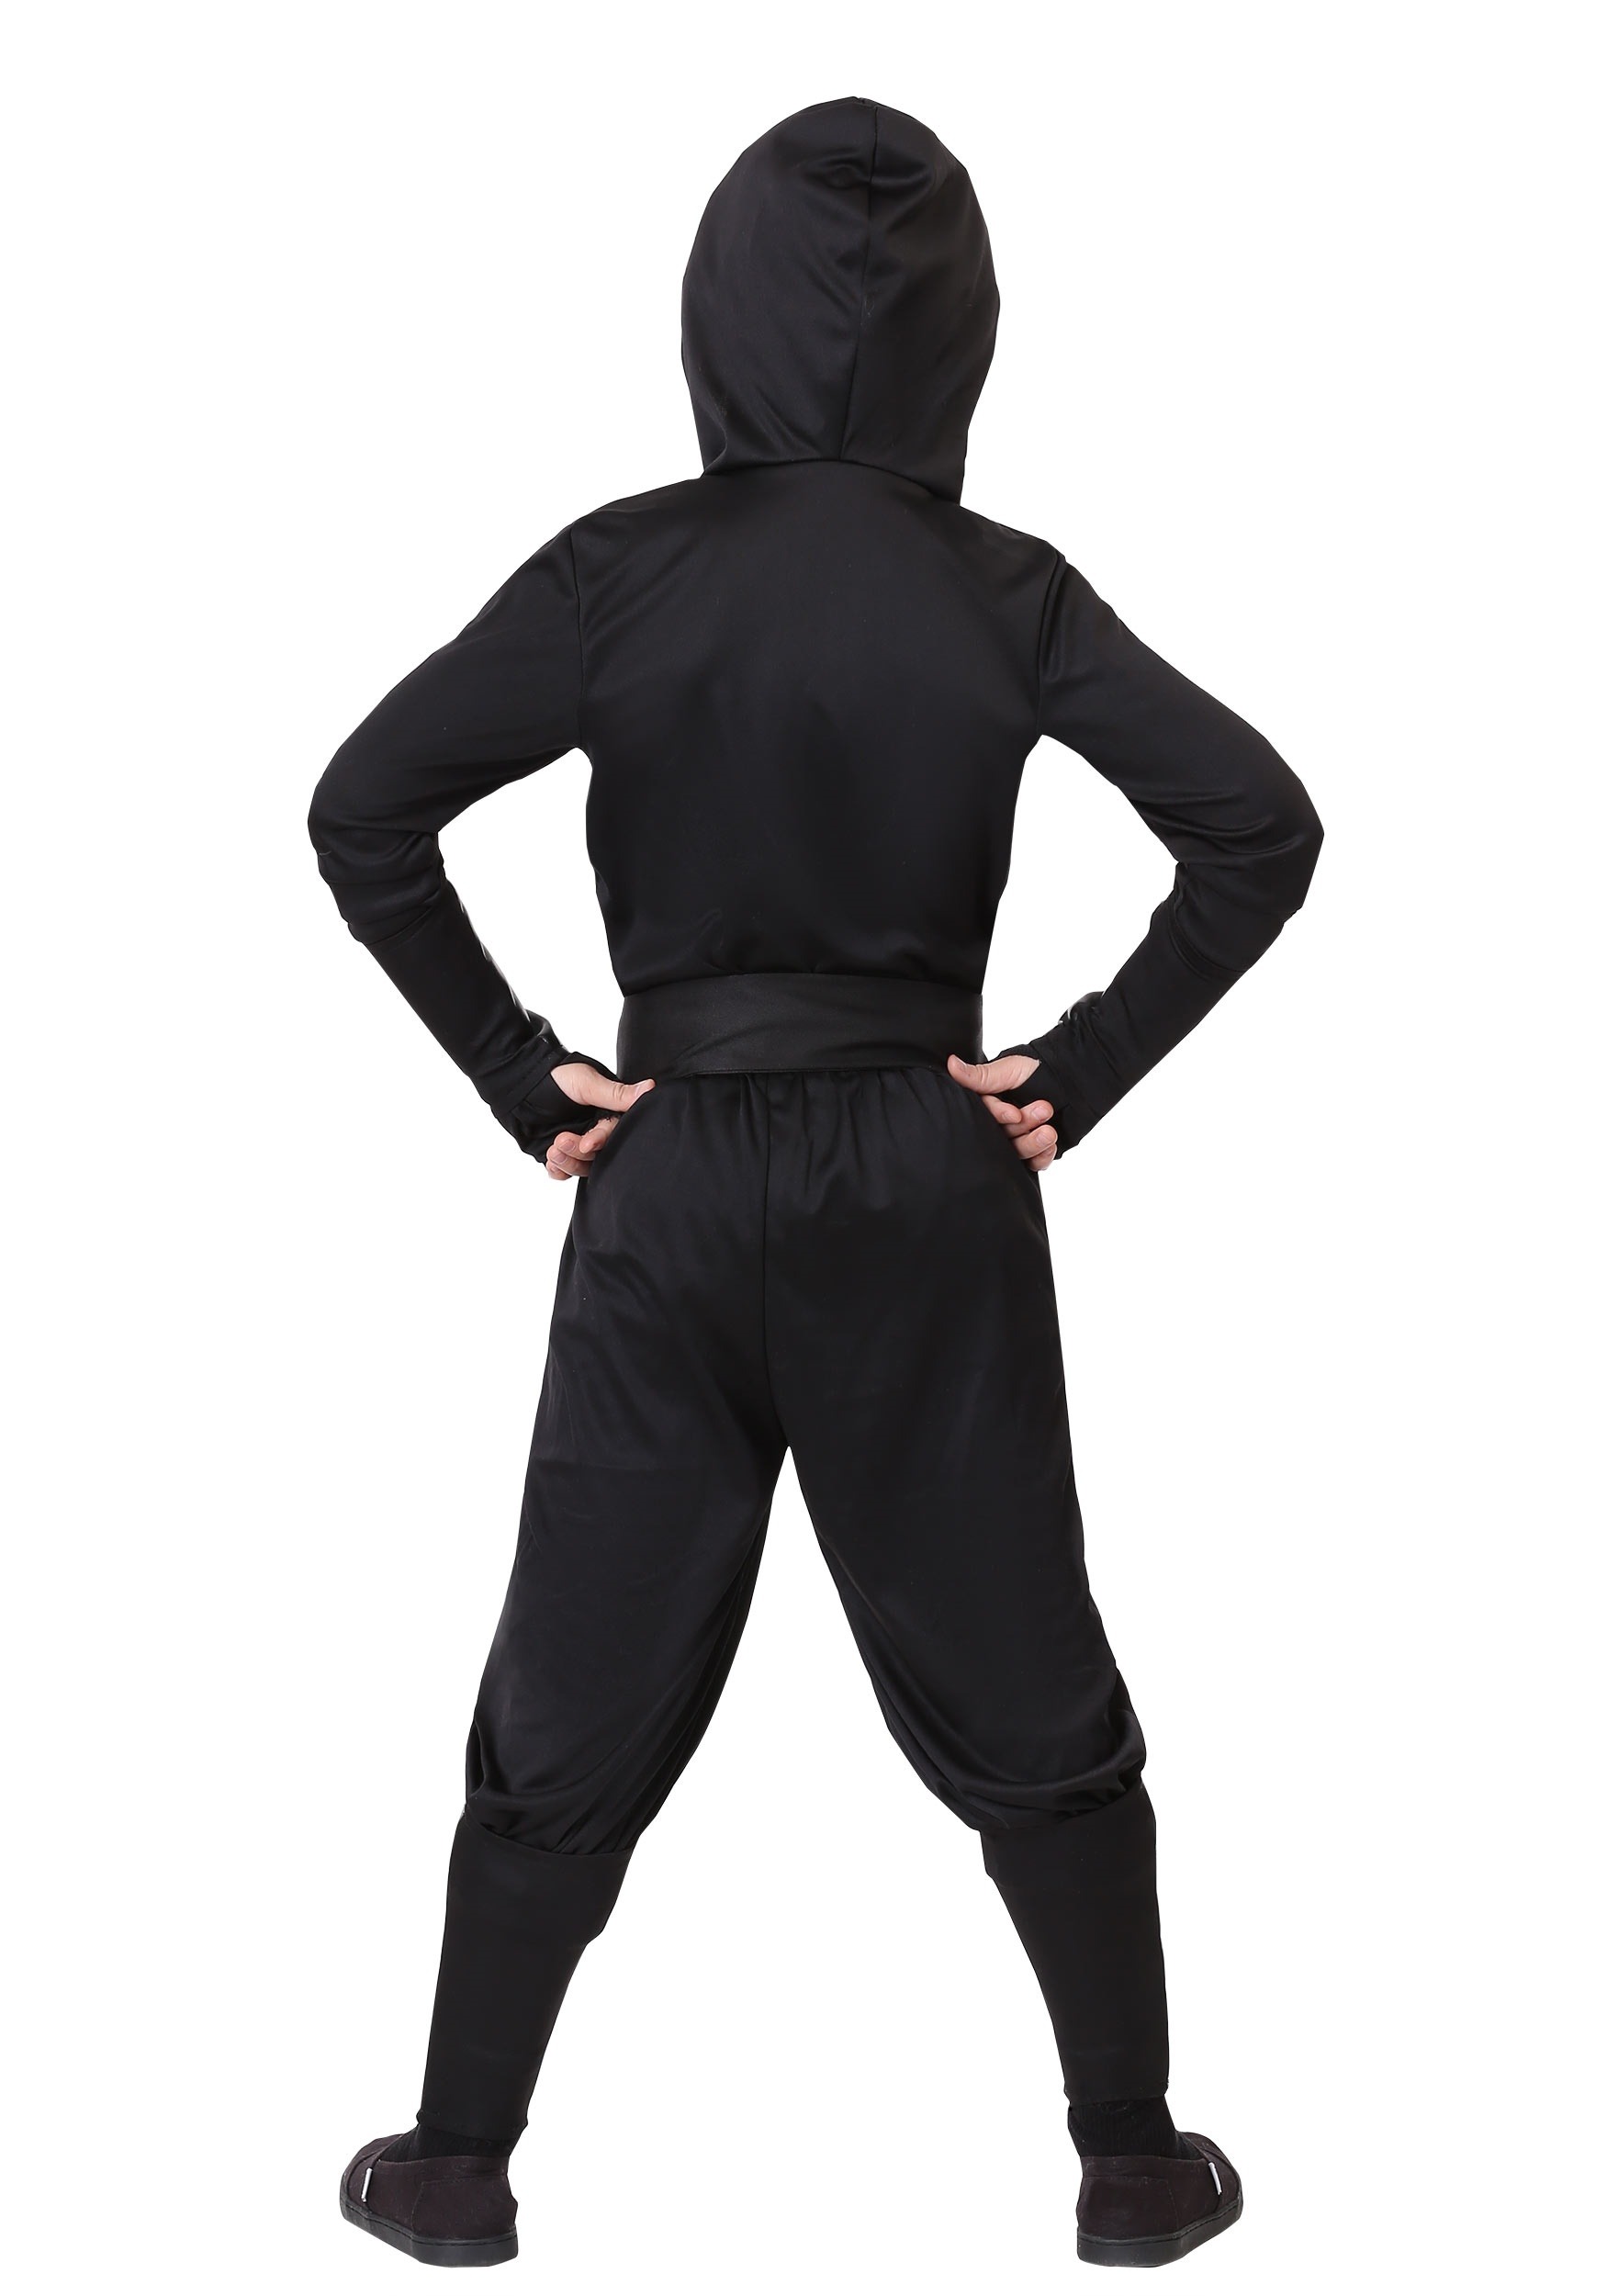 https://images.halloweencostumes.com/products/45083/2-1-91904/child-stealth-shinobi-ninja-costume-alt-2.jpg